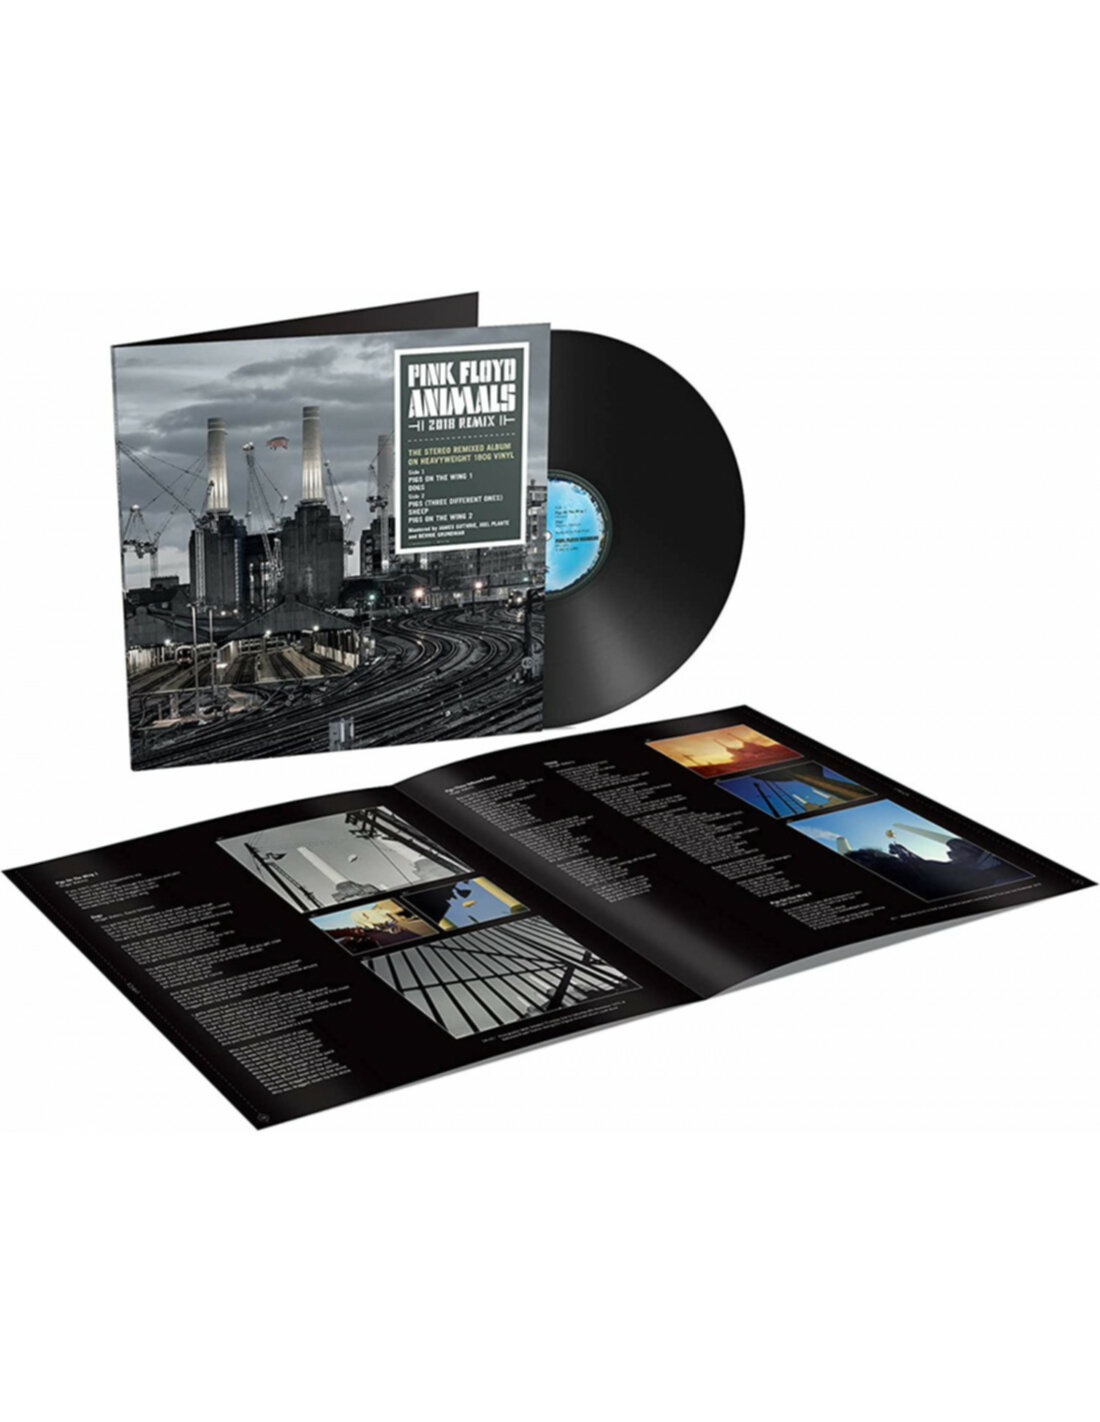 Pink Floyd - Animals (2018 Remix - Vinyl Edition)